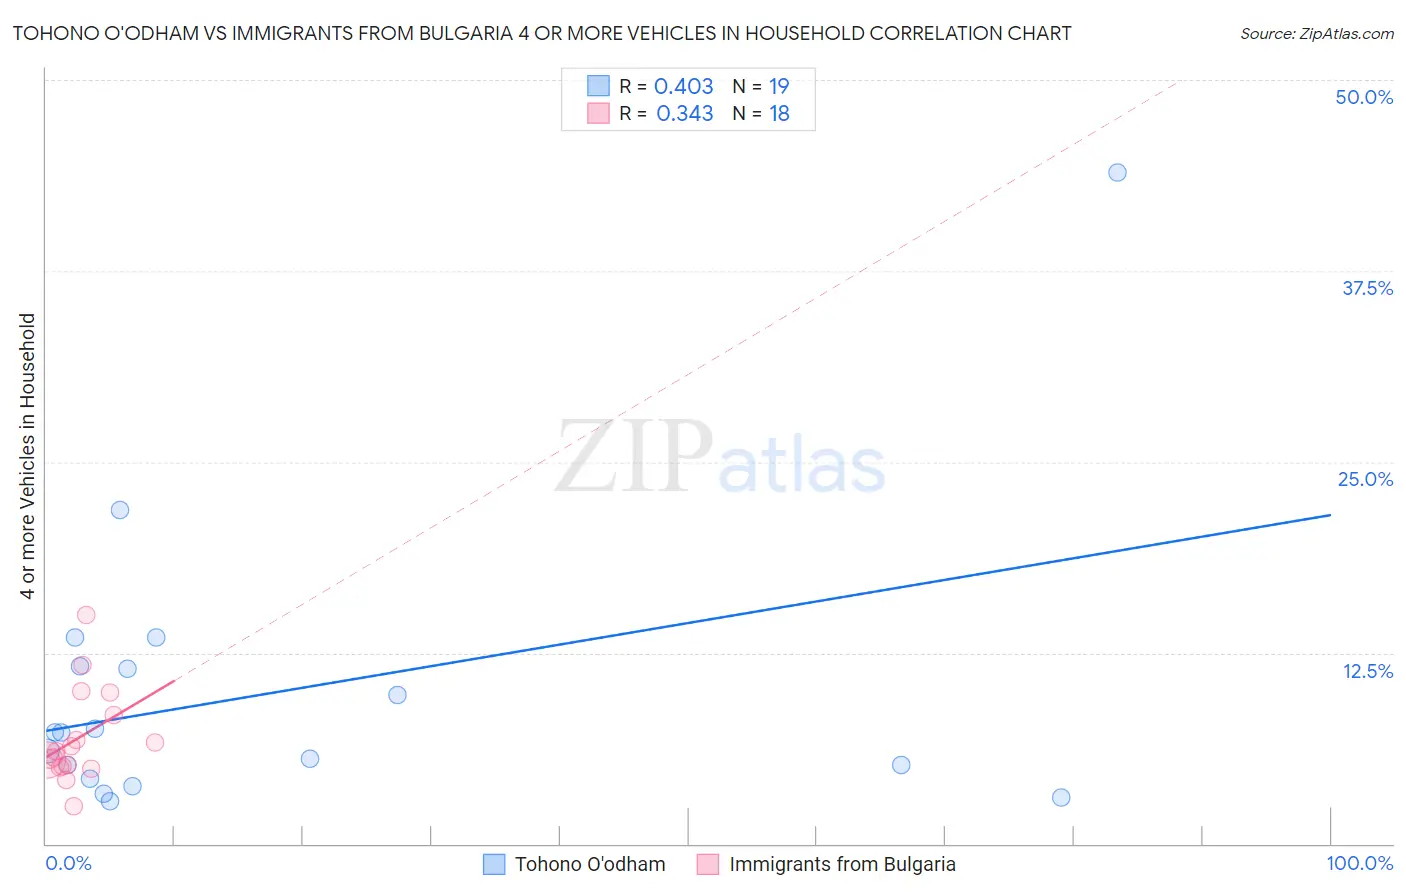 Tohono O'odham vs Immigrants from Bulgaria 4 or more Vehicles in Household